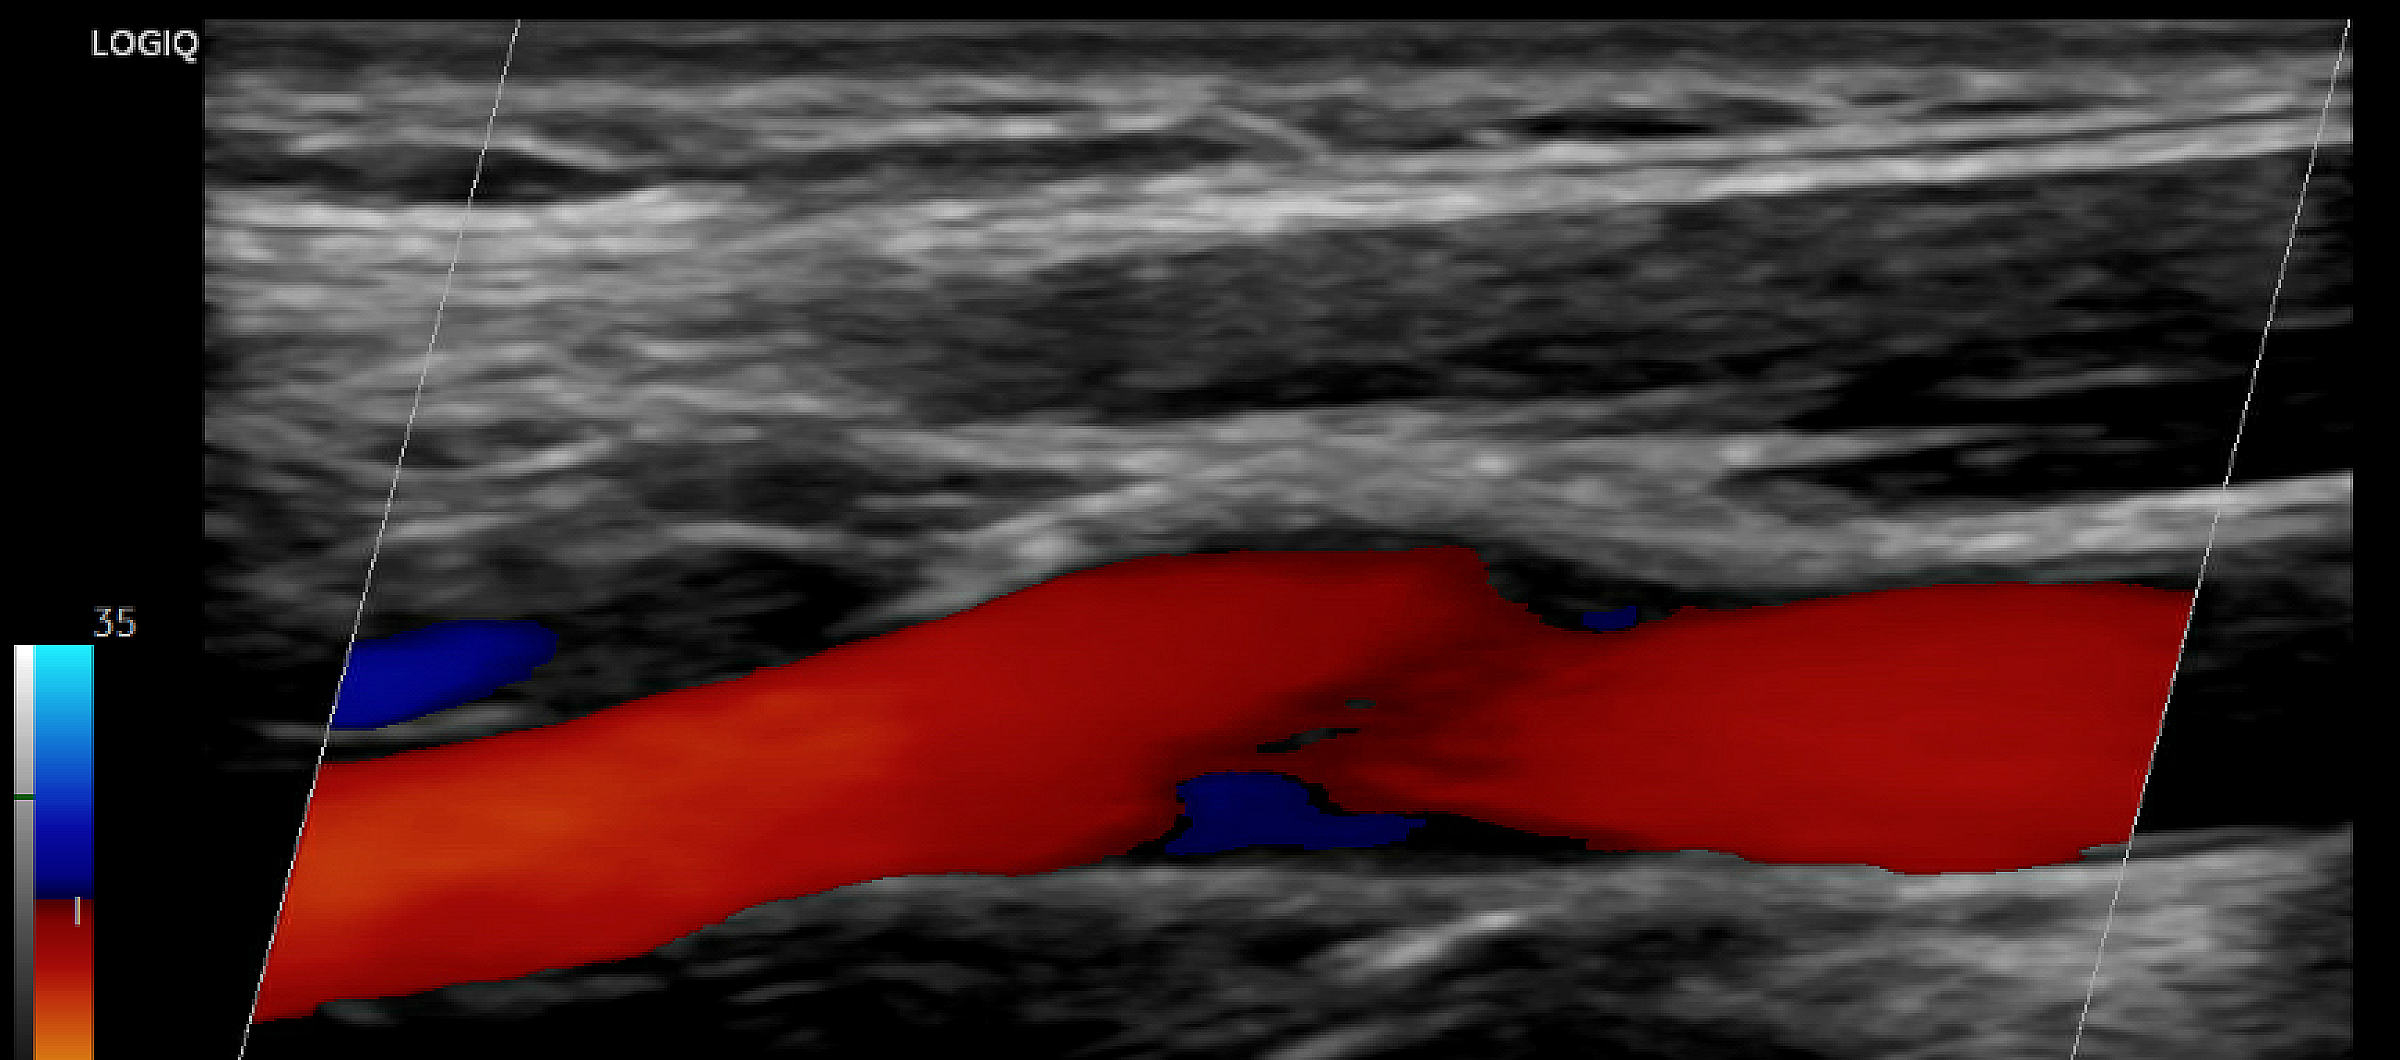 Vascular ultrasound of carotid artery. The artery is highlighted in orange.